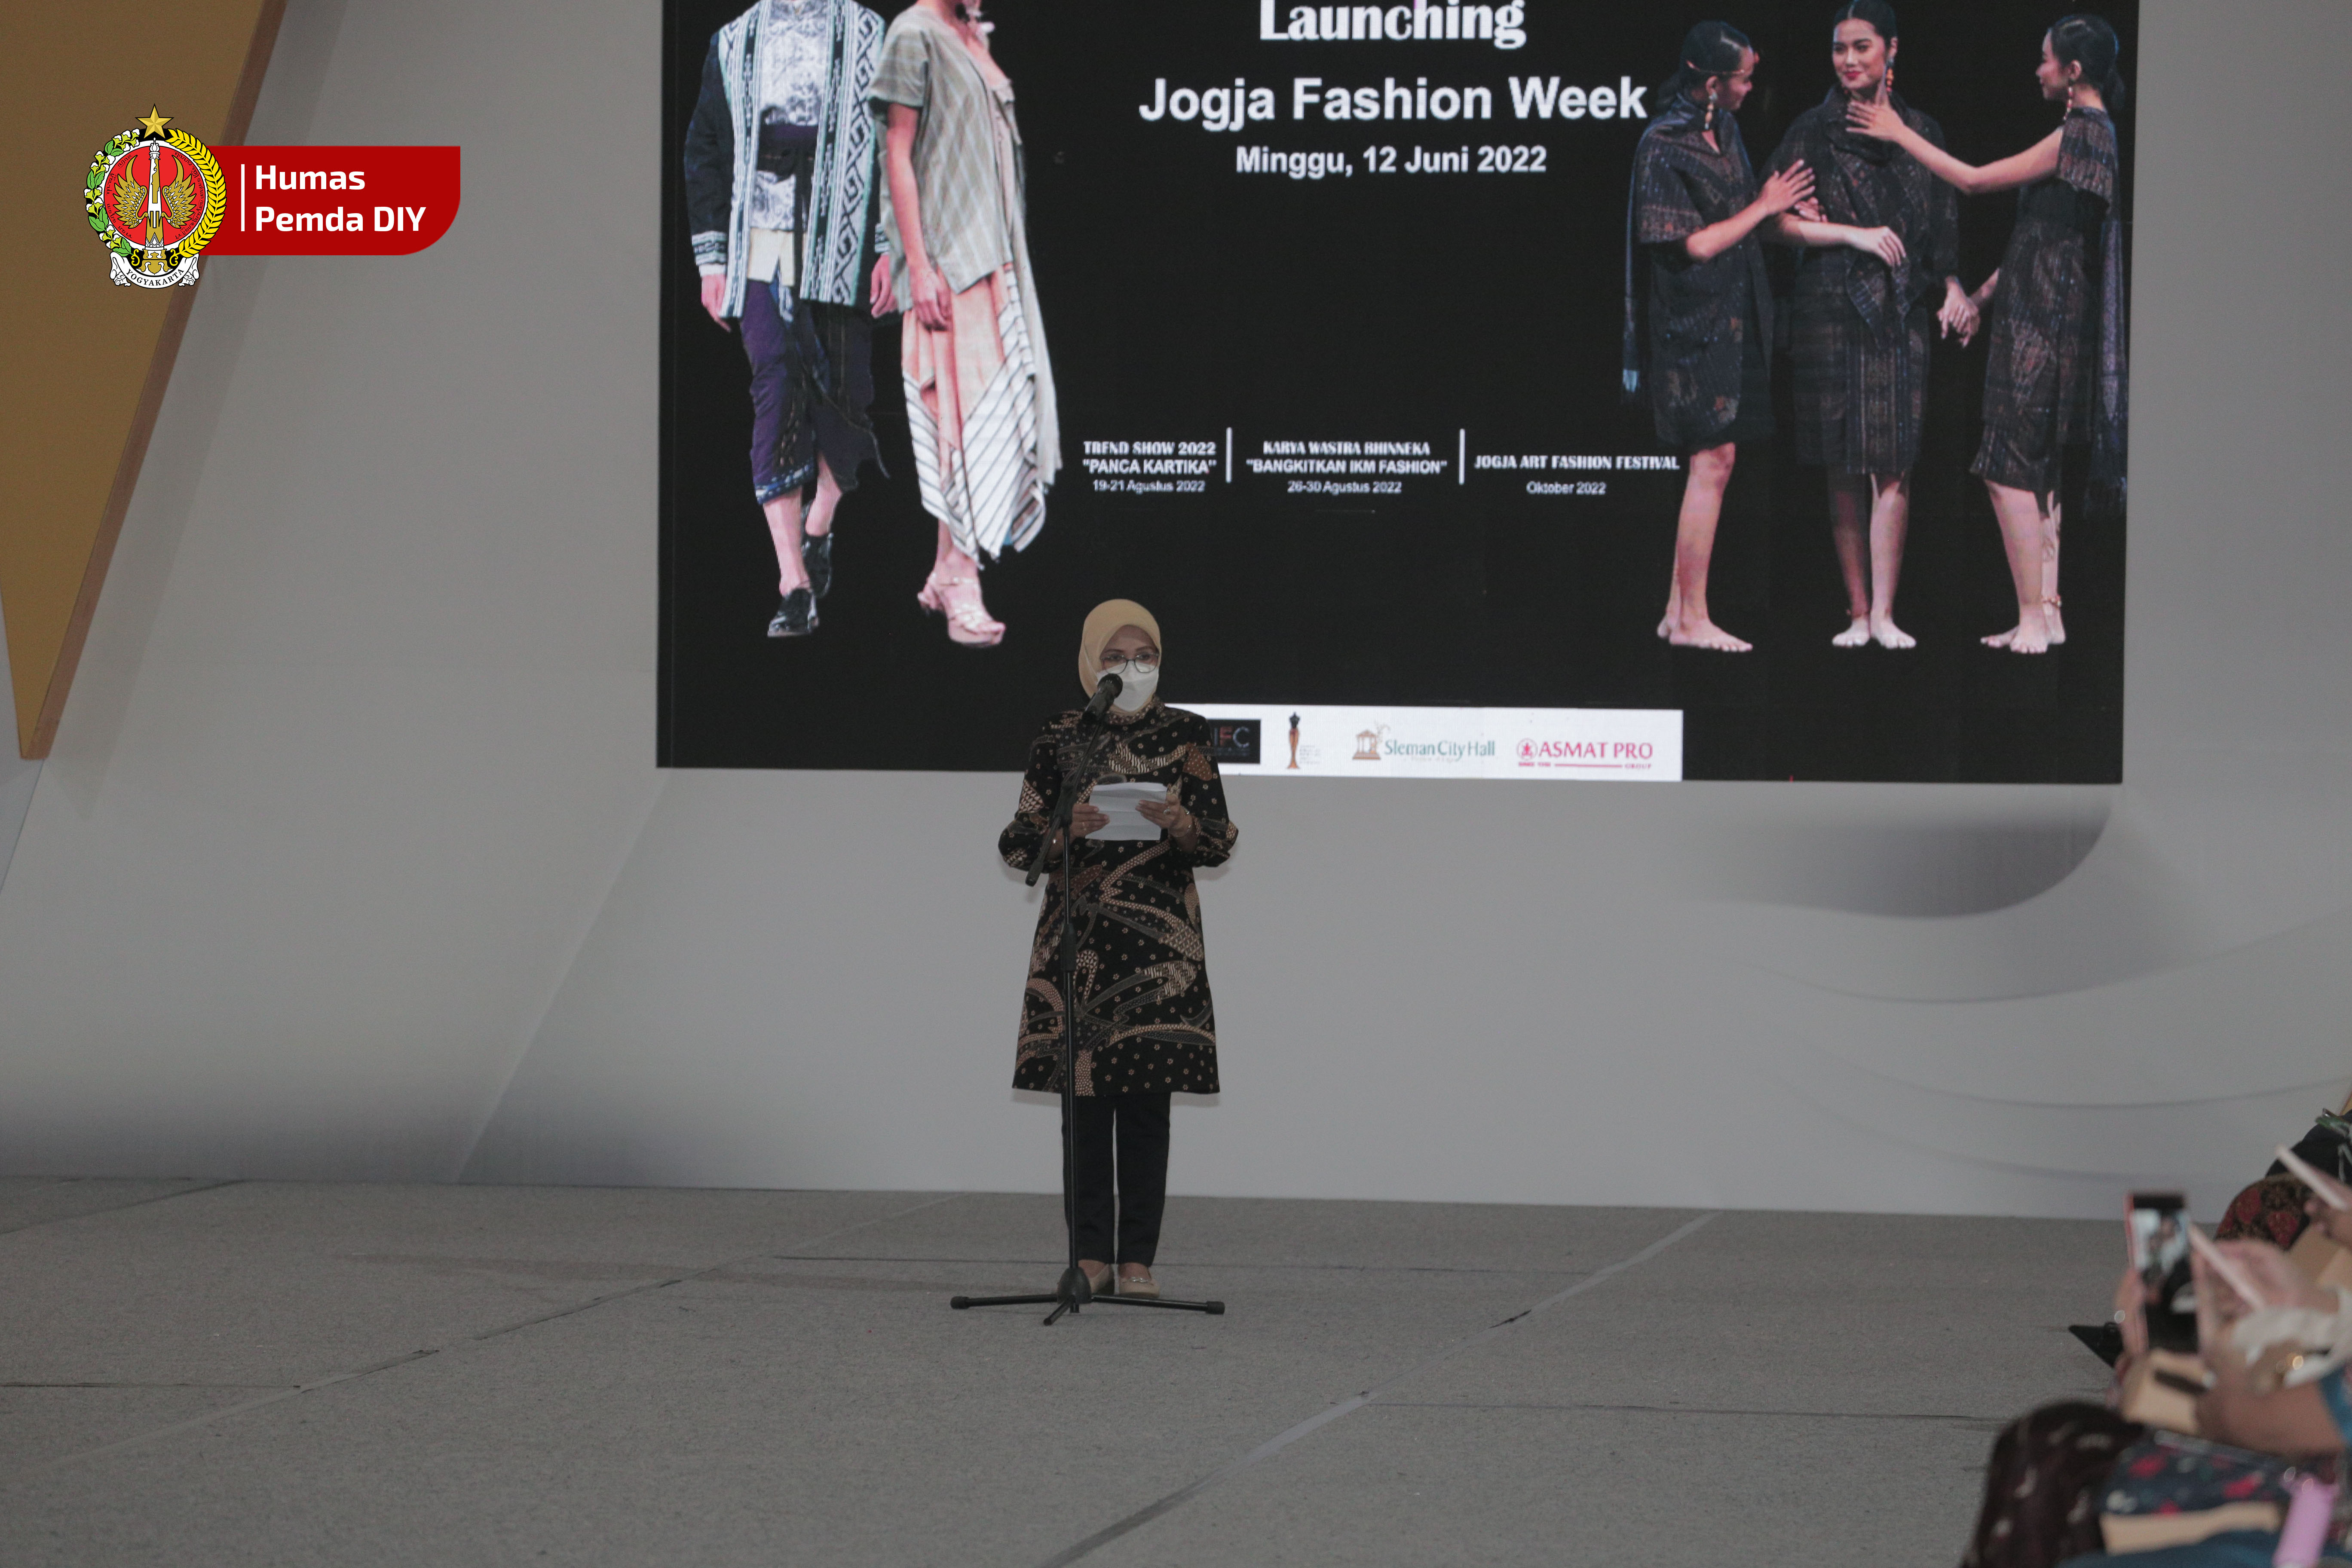 Grand Launching Jogja Fashion Week 2022